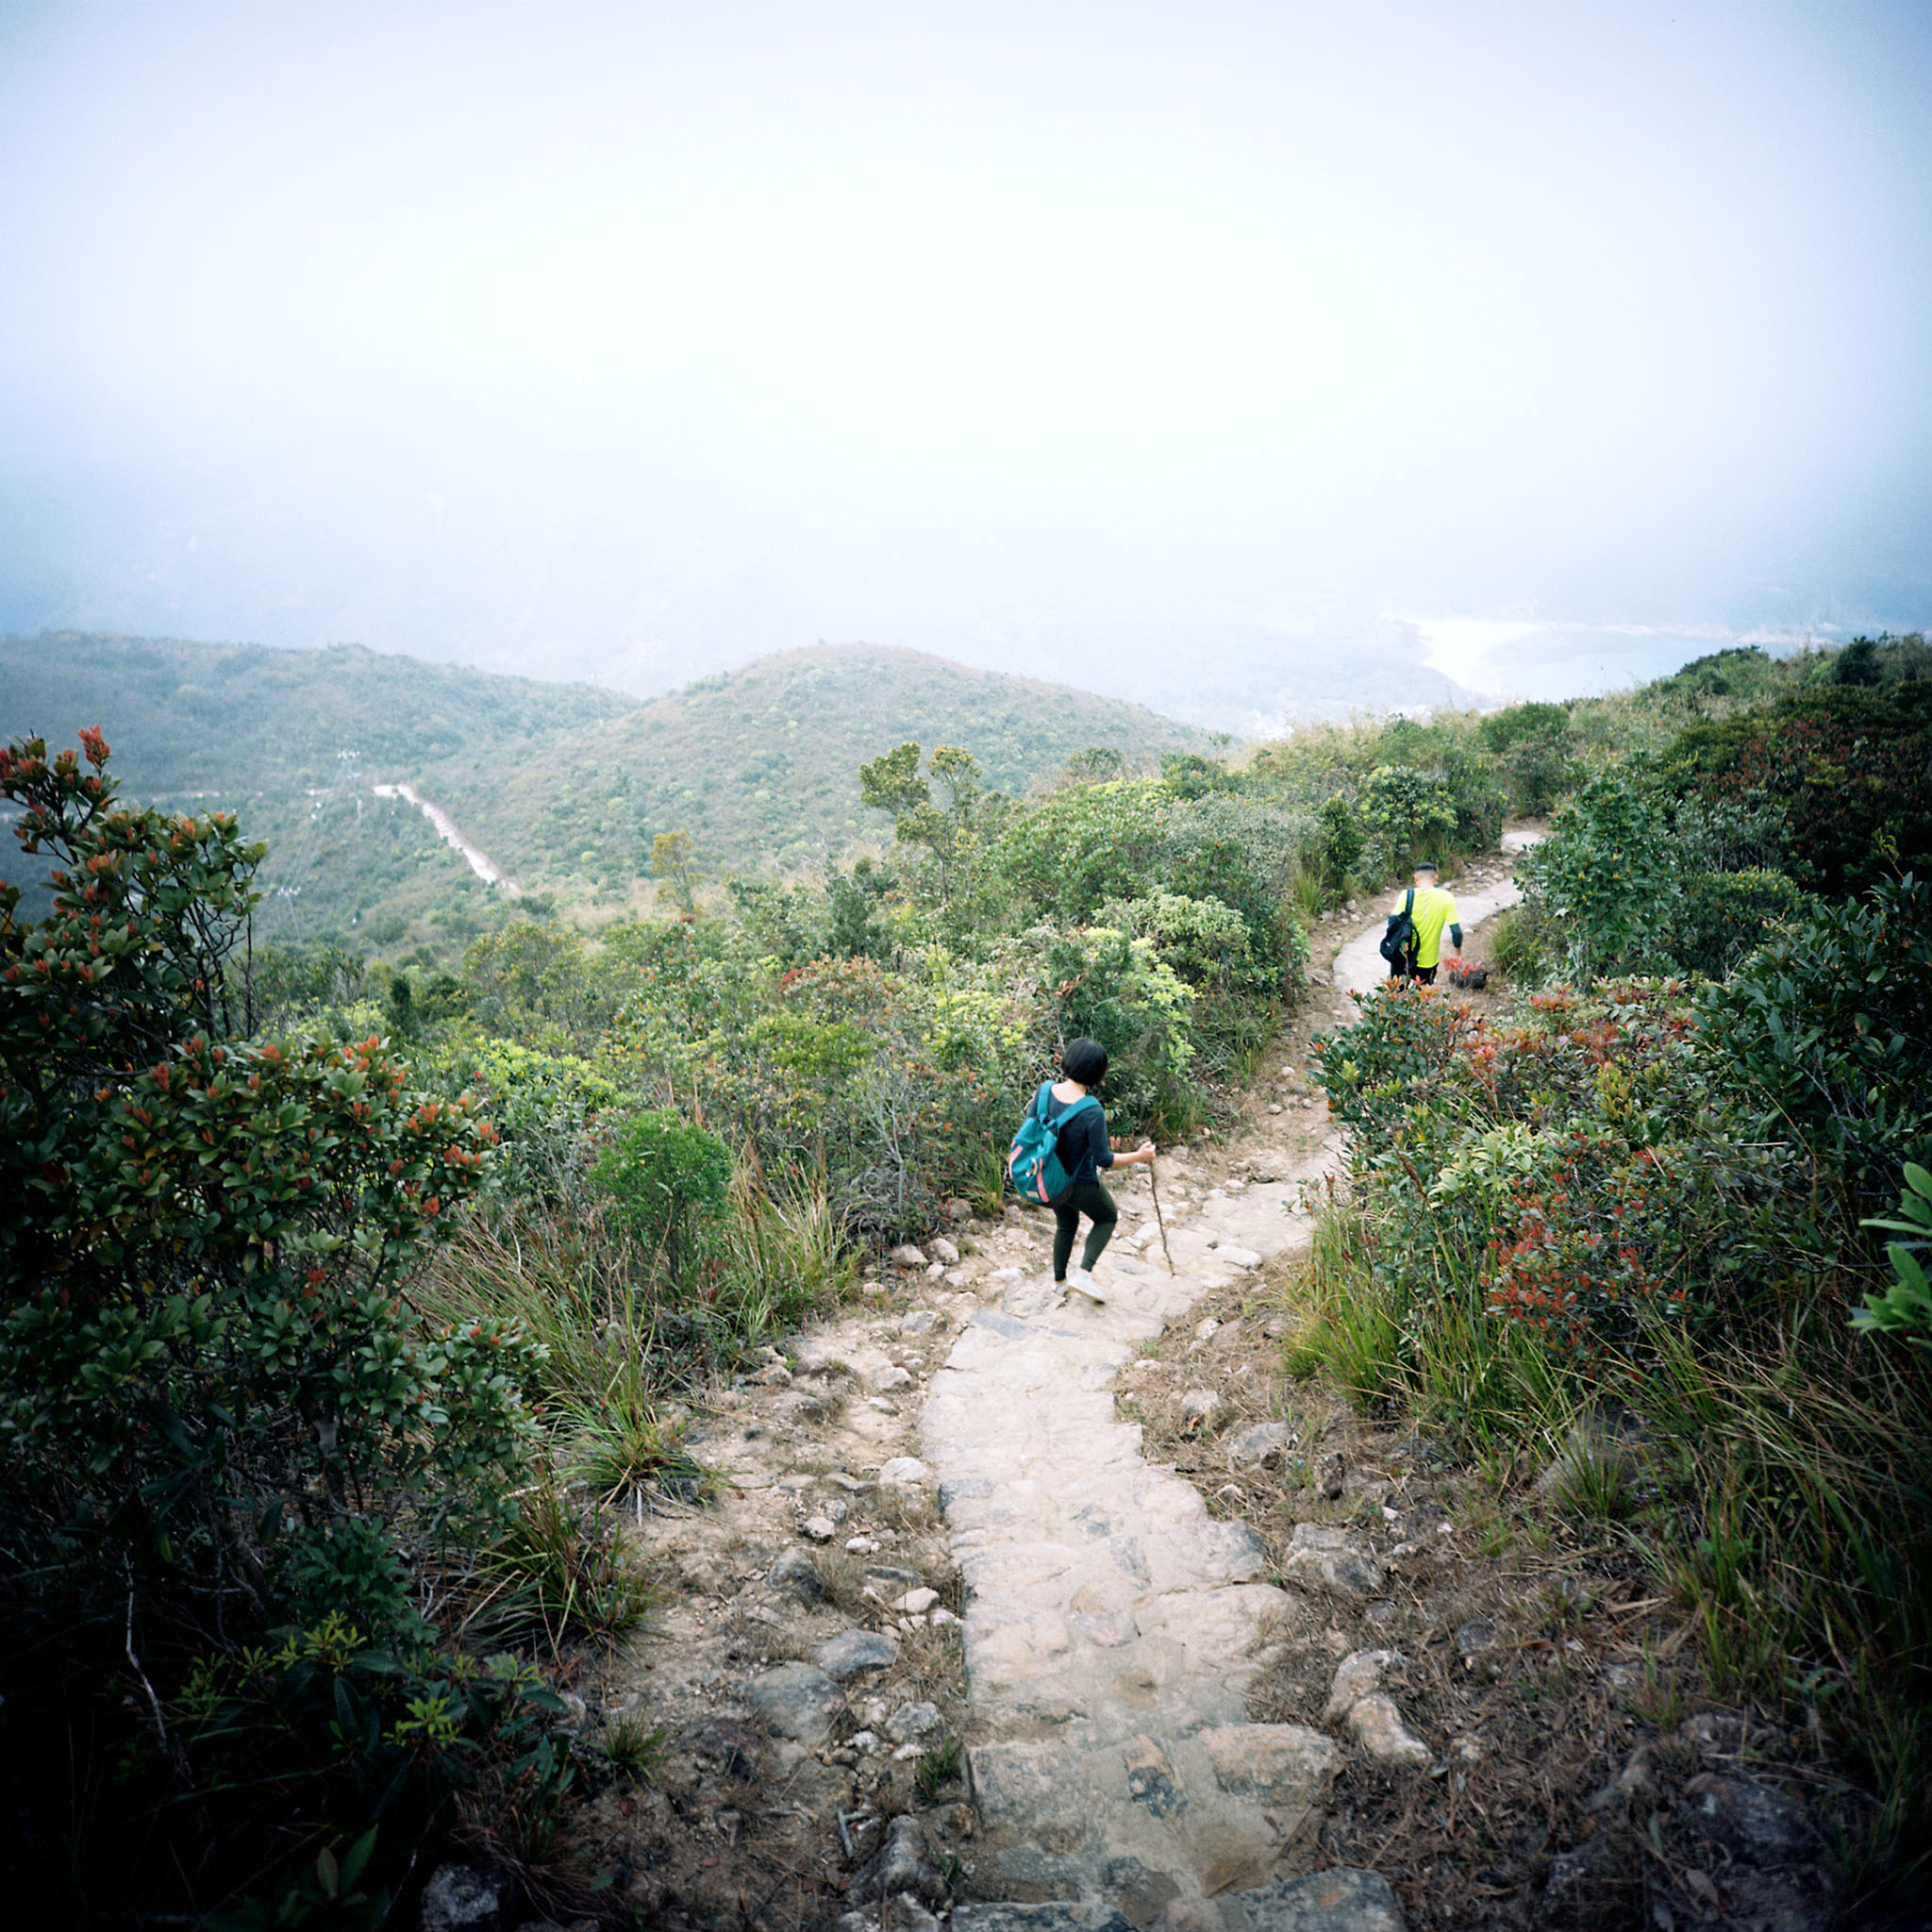 img/1802-hongkong-hiking-maclehose-trail/tat-tso-1802-hongkong-hiking-maclehose-trail-04.jpg